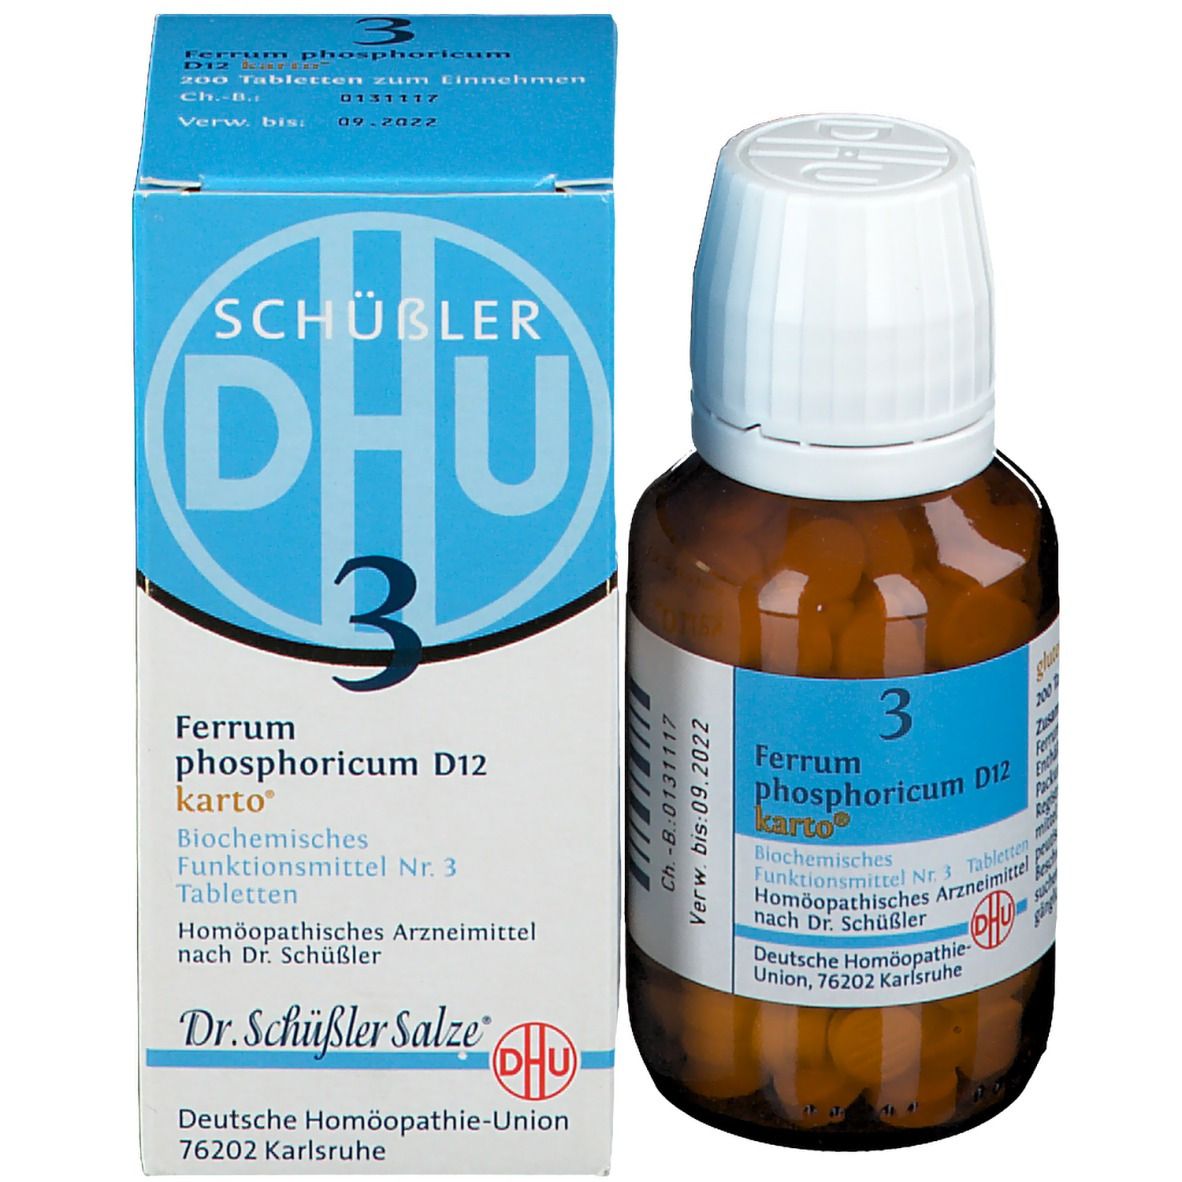 DHU Biochemie 3 Ferrum phosphoricum D 12 karto